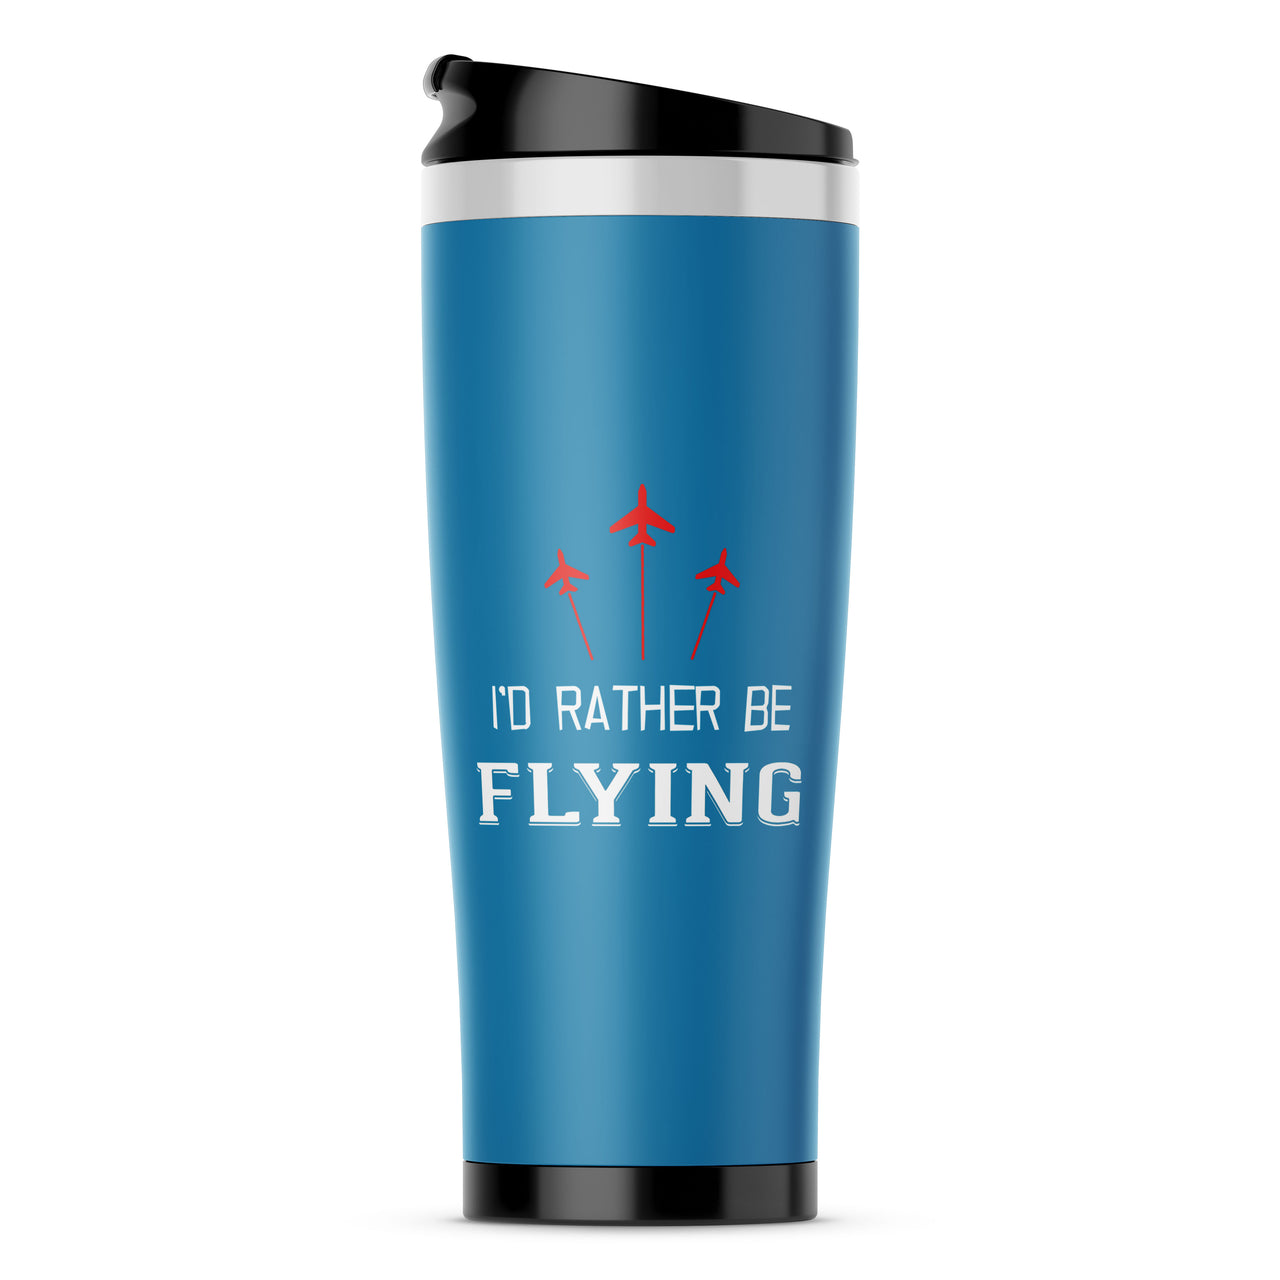 I'D Rather Be Flying Designed Travel Mugs